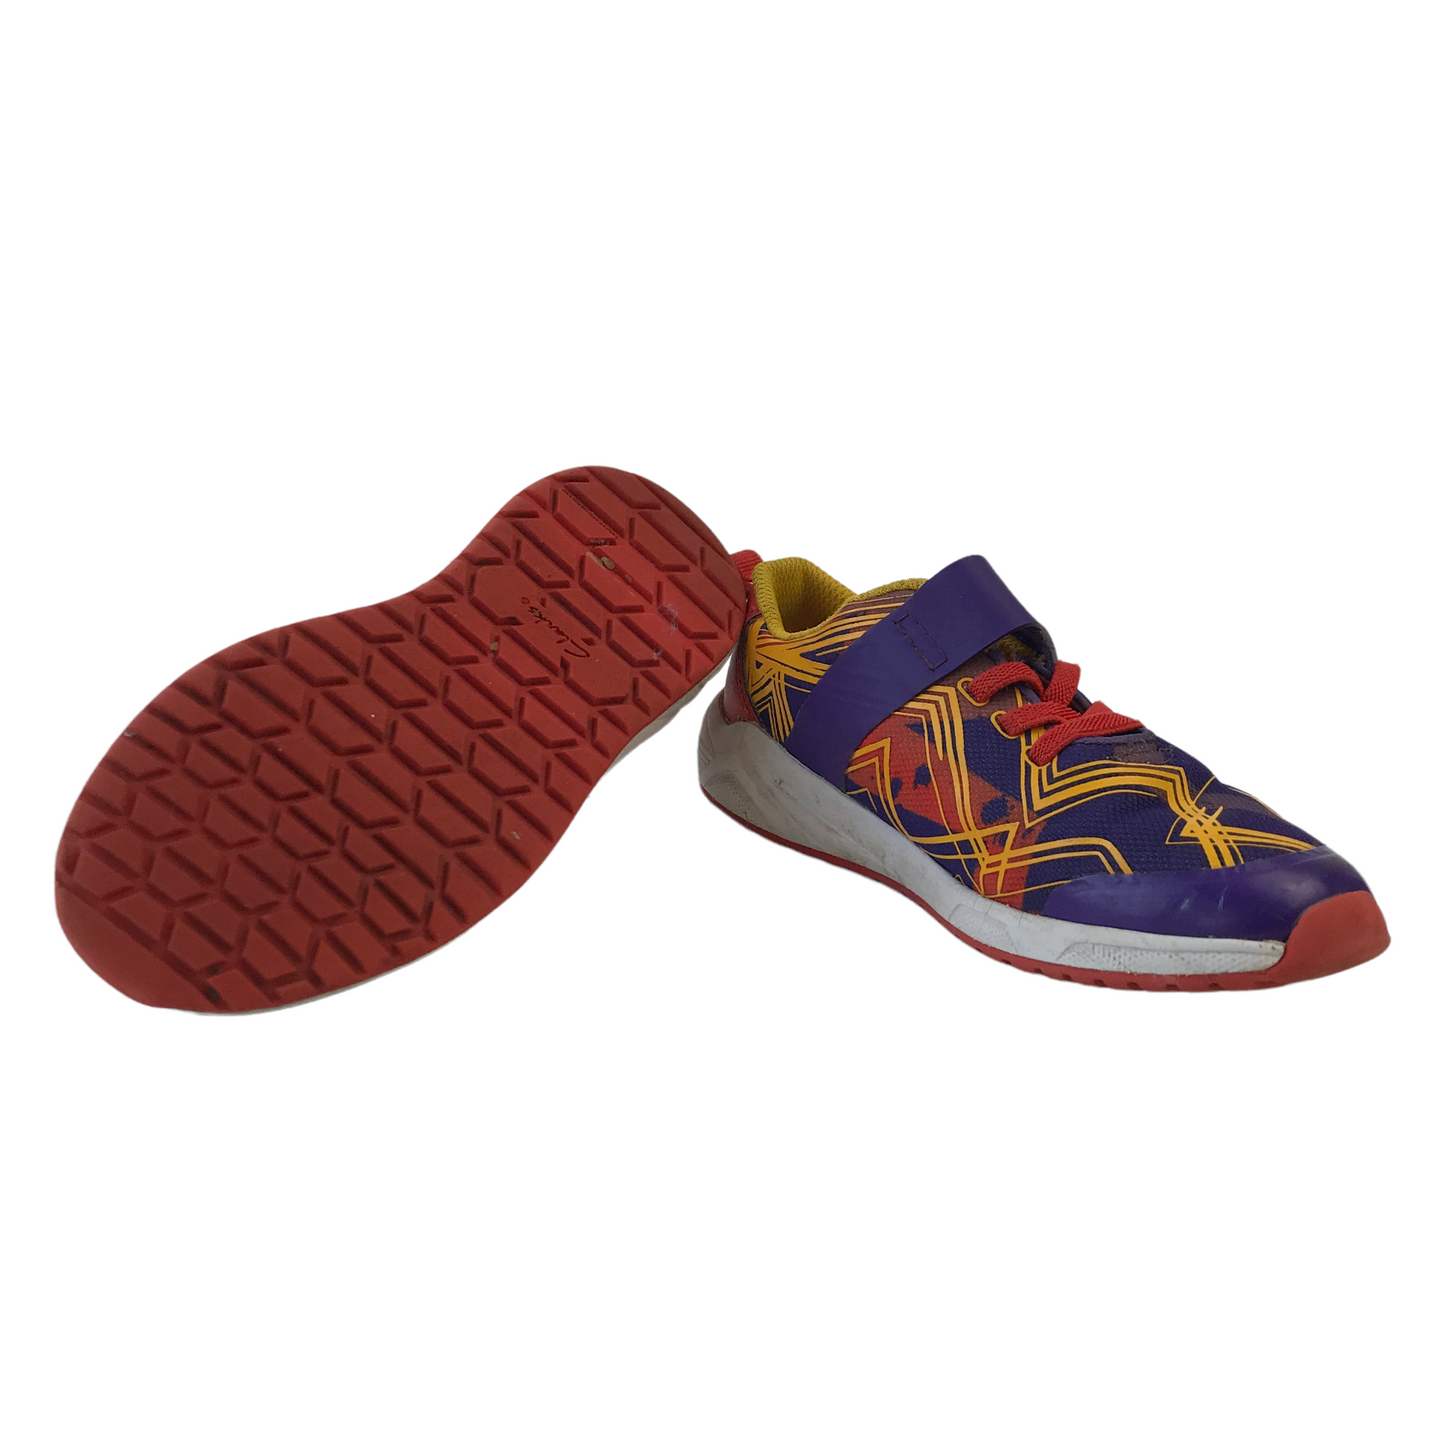 Clarks Multicoloured Trainers Shoe Size 11F (jr)